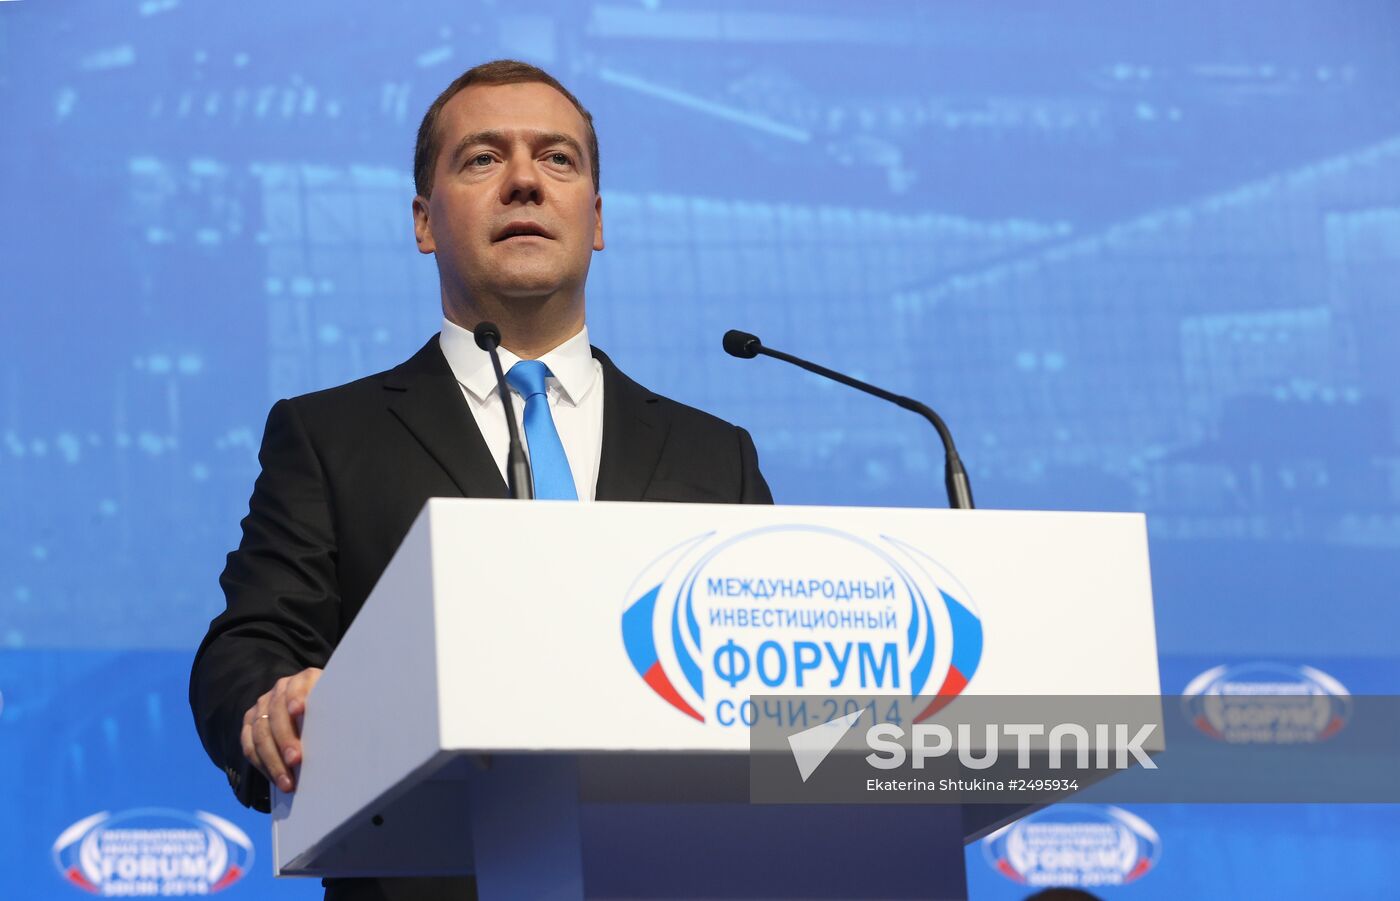 D.Medvedev's working trip to Sochi